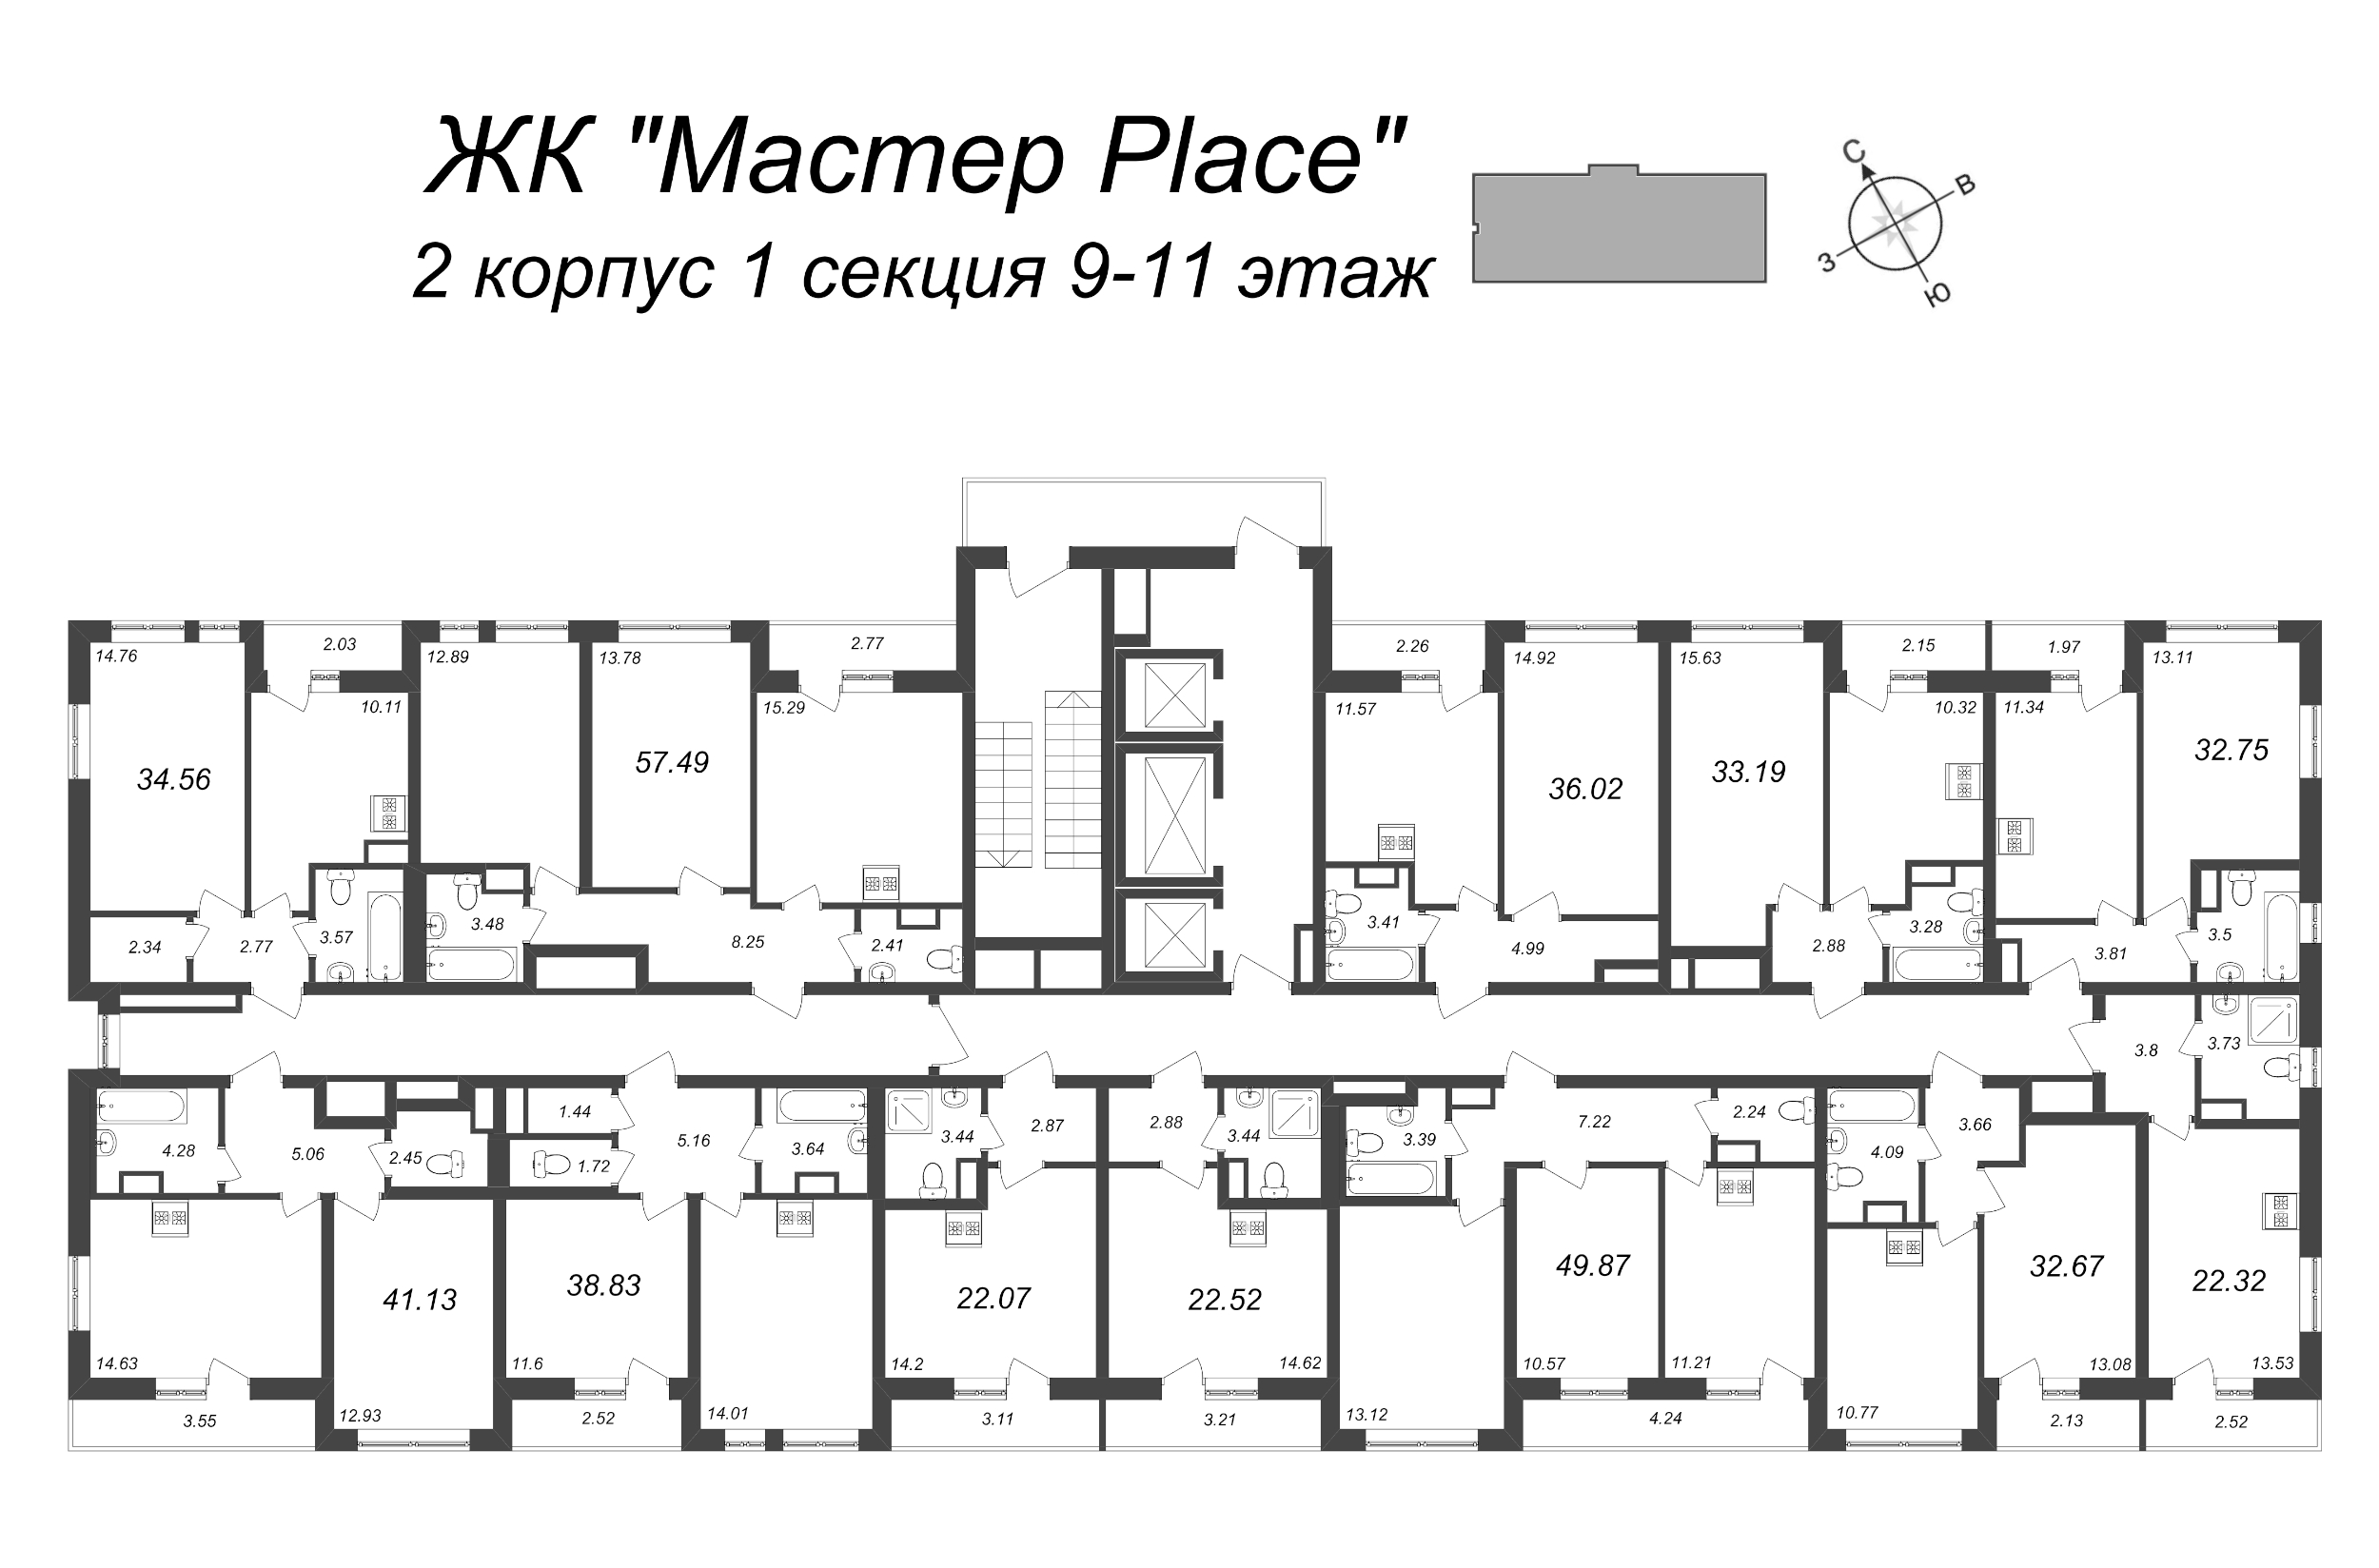 2-комнатная (Евро) квартира, 38.83 м² - планировка этажа